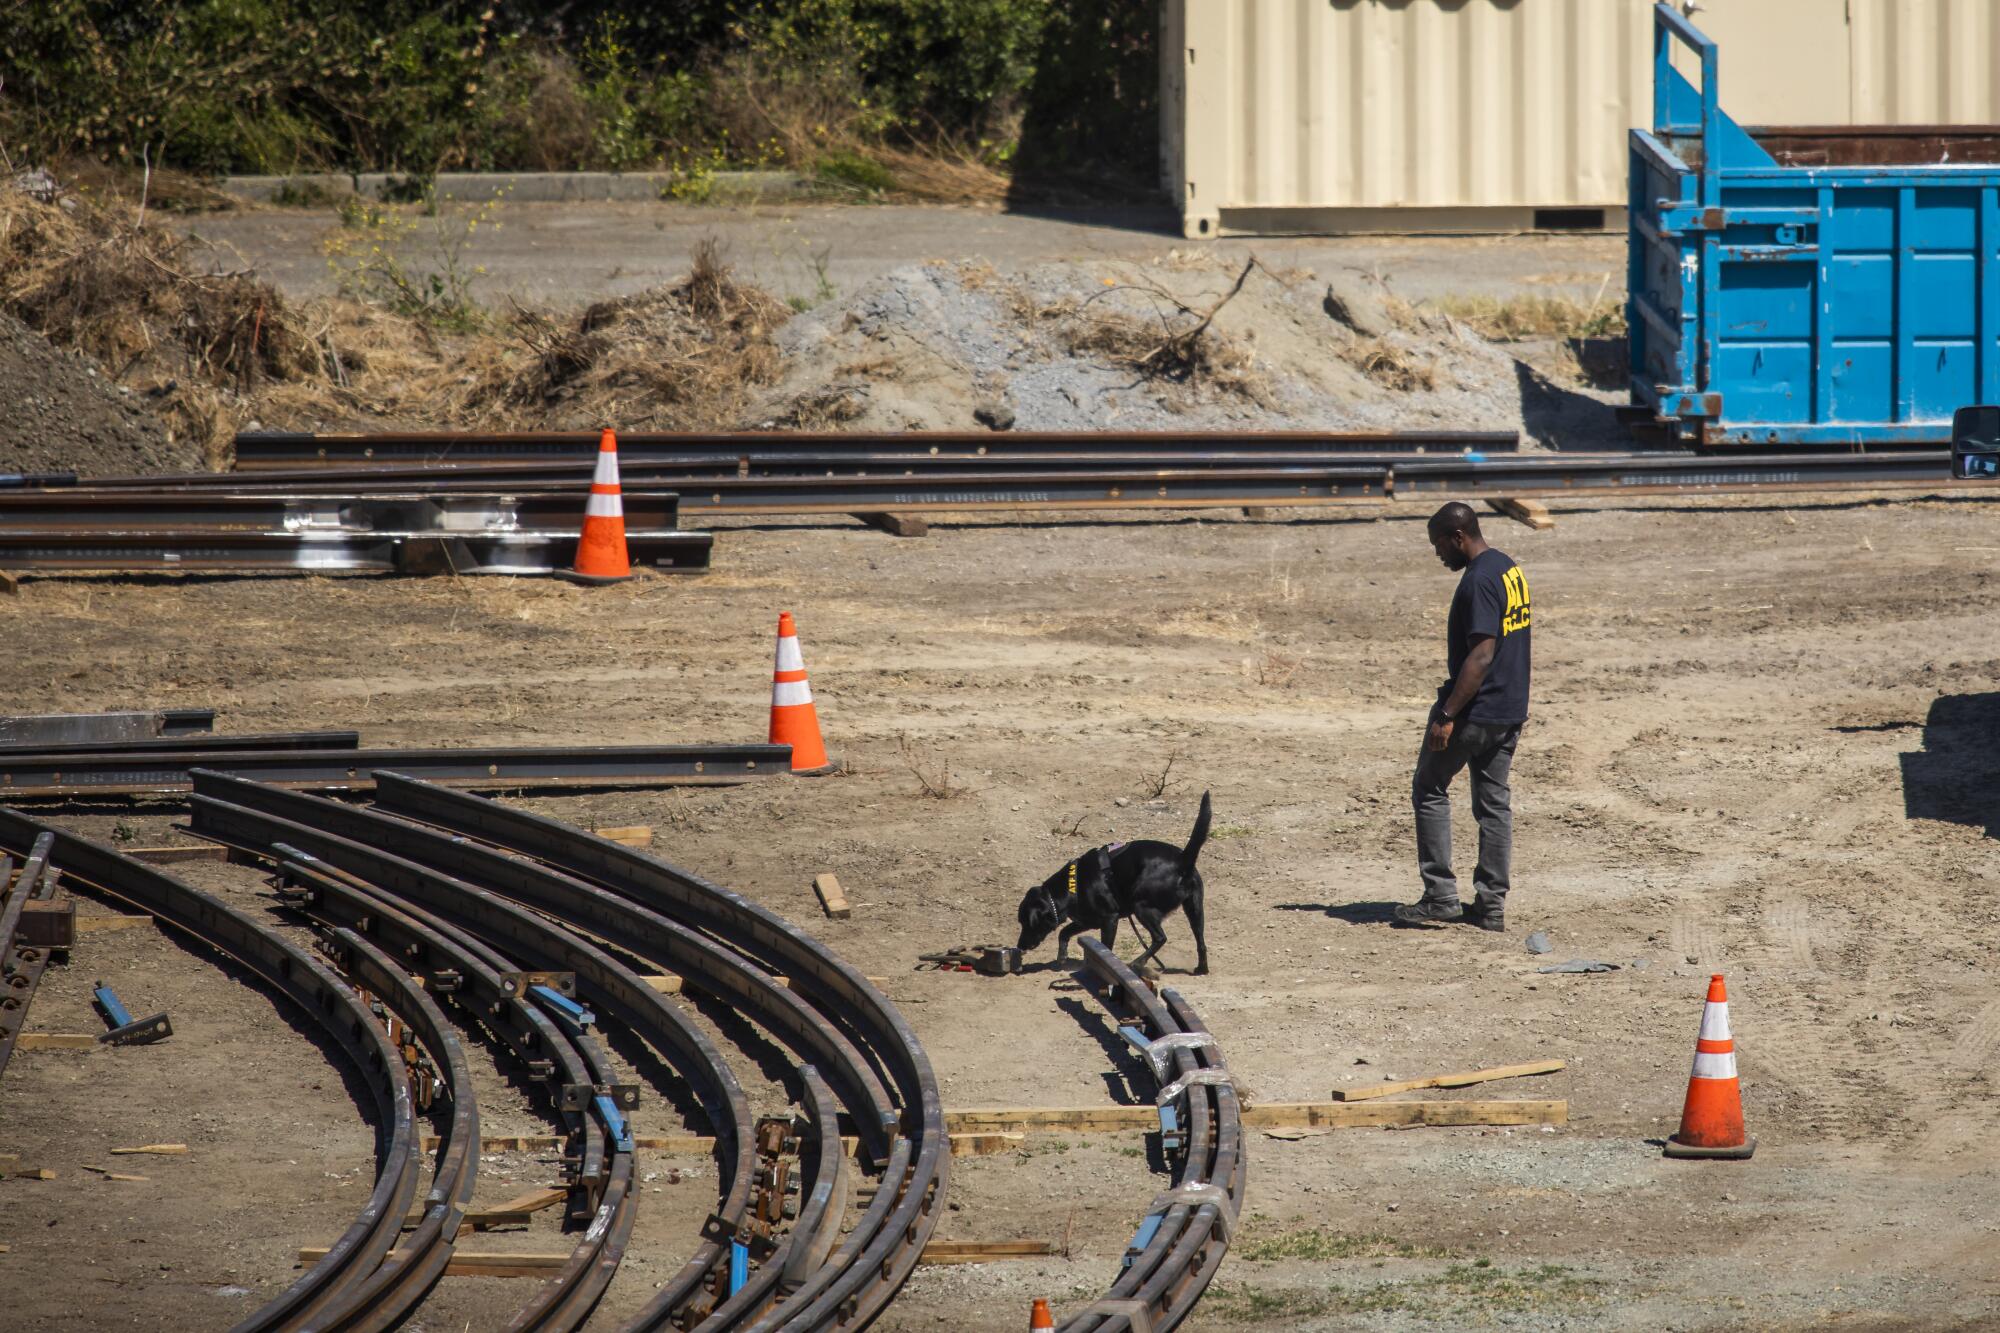 A person and a dog walk near rails.